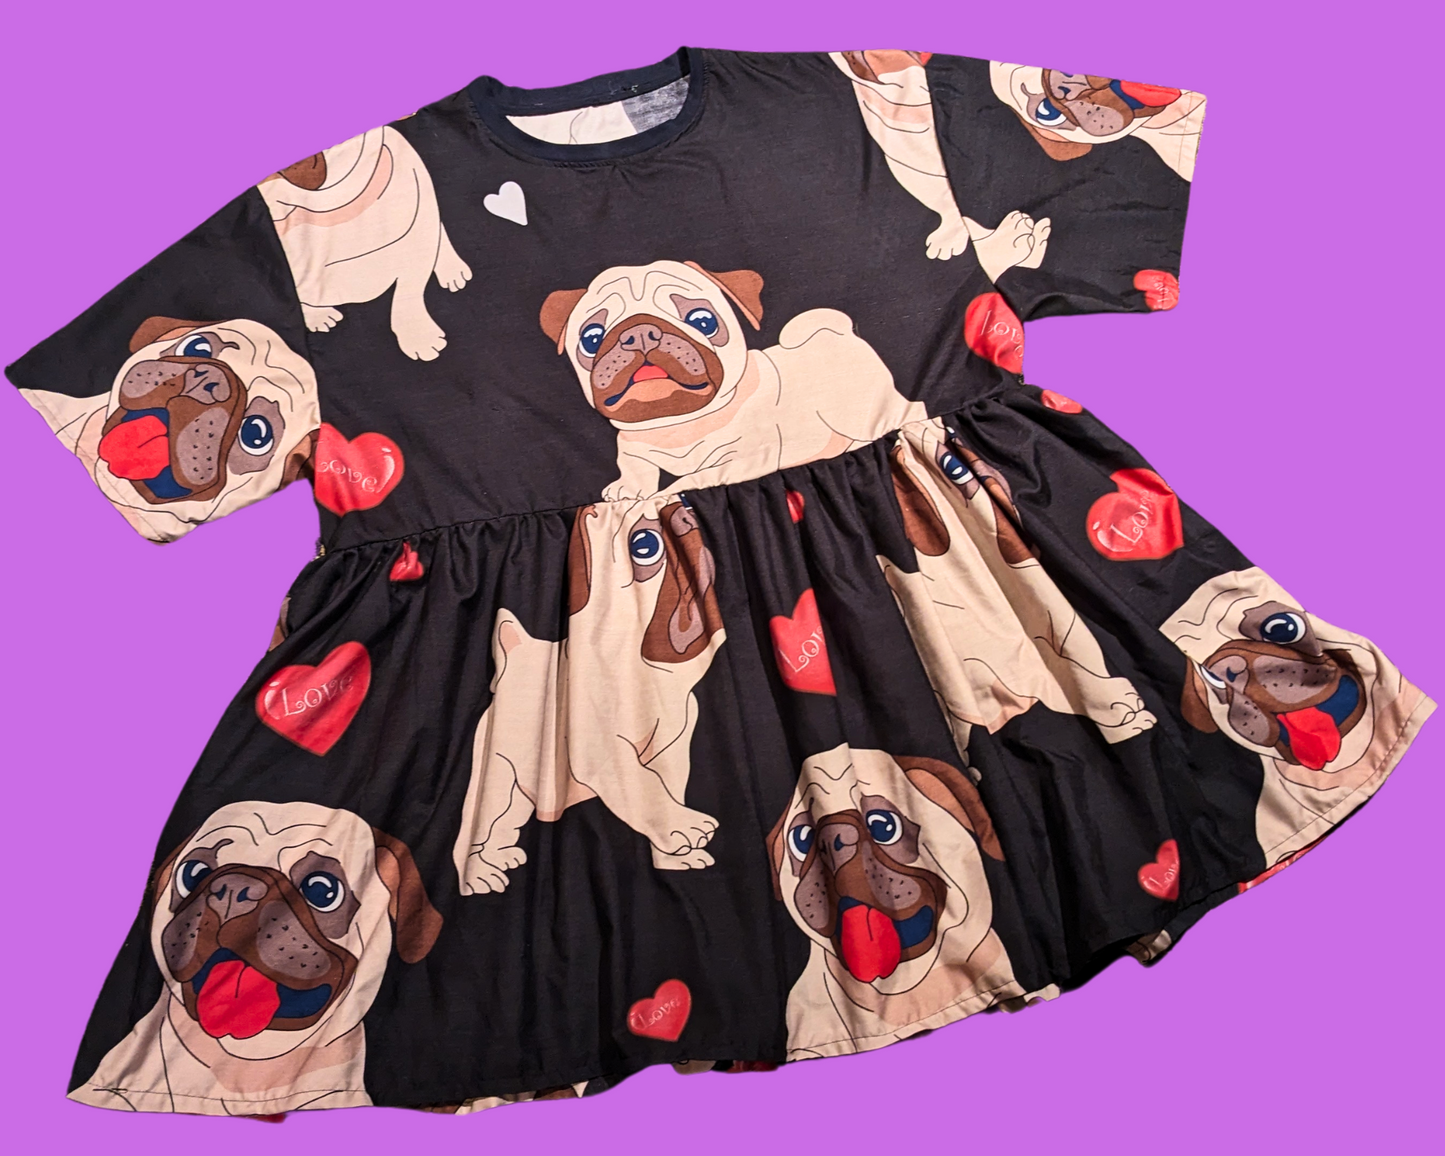 Handmade, Upcycled Pug Print Bedsheet T-Shirt Dress Fits 2XL